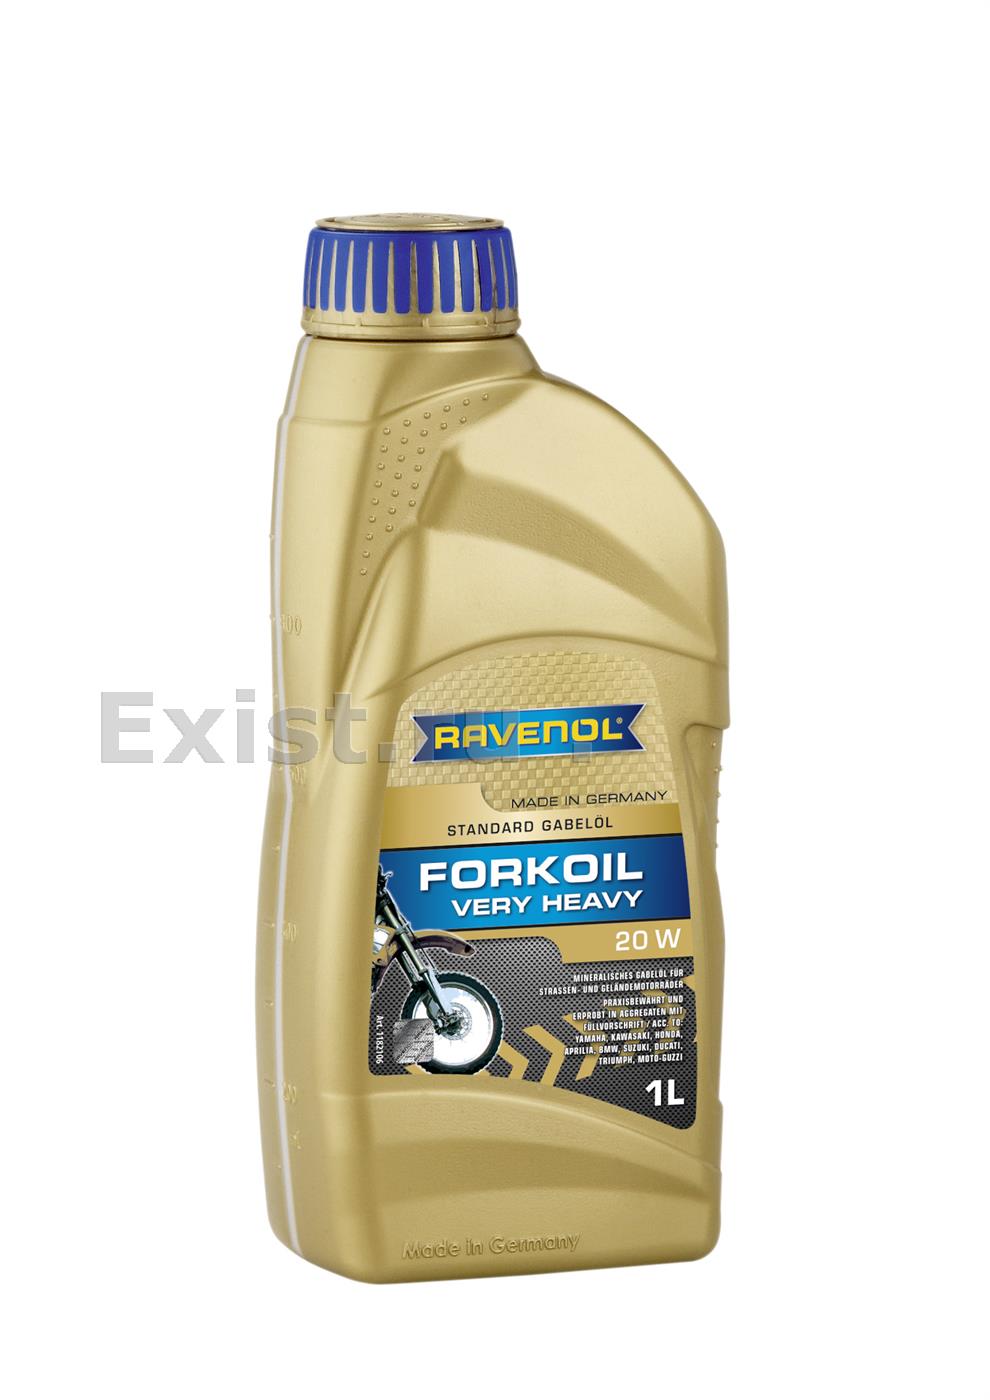 Вилочное масло ravenol forkoil very heavy 20w (1л) new